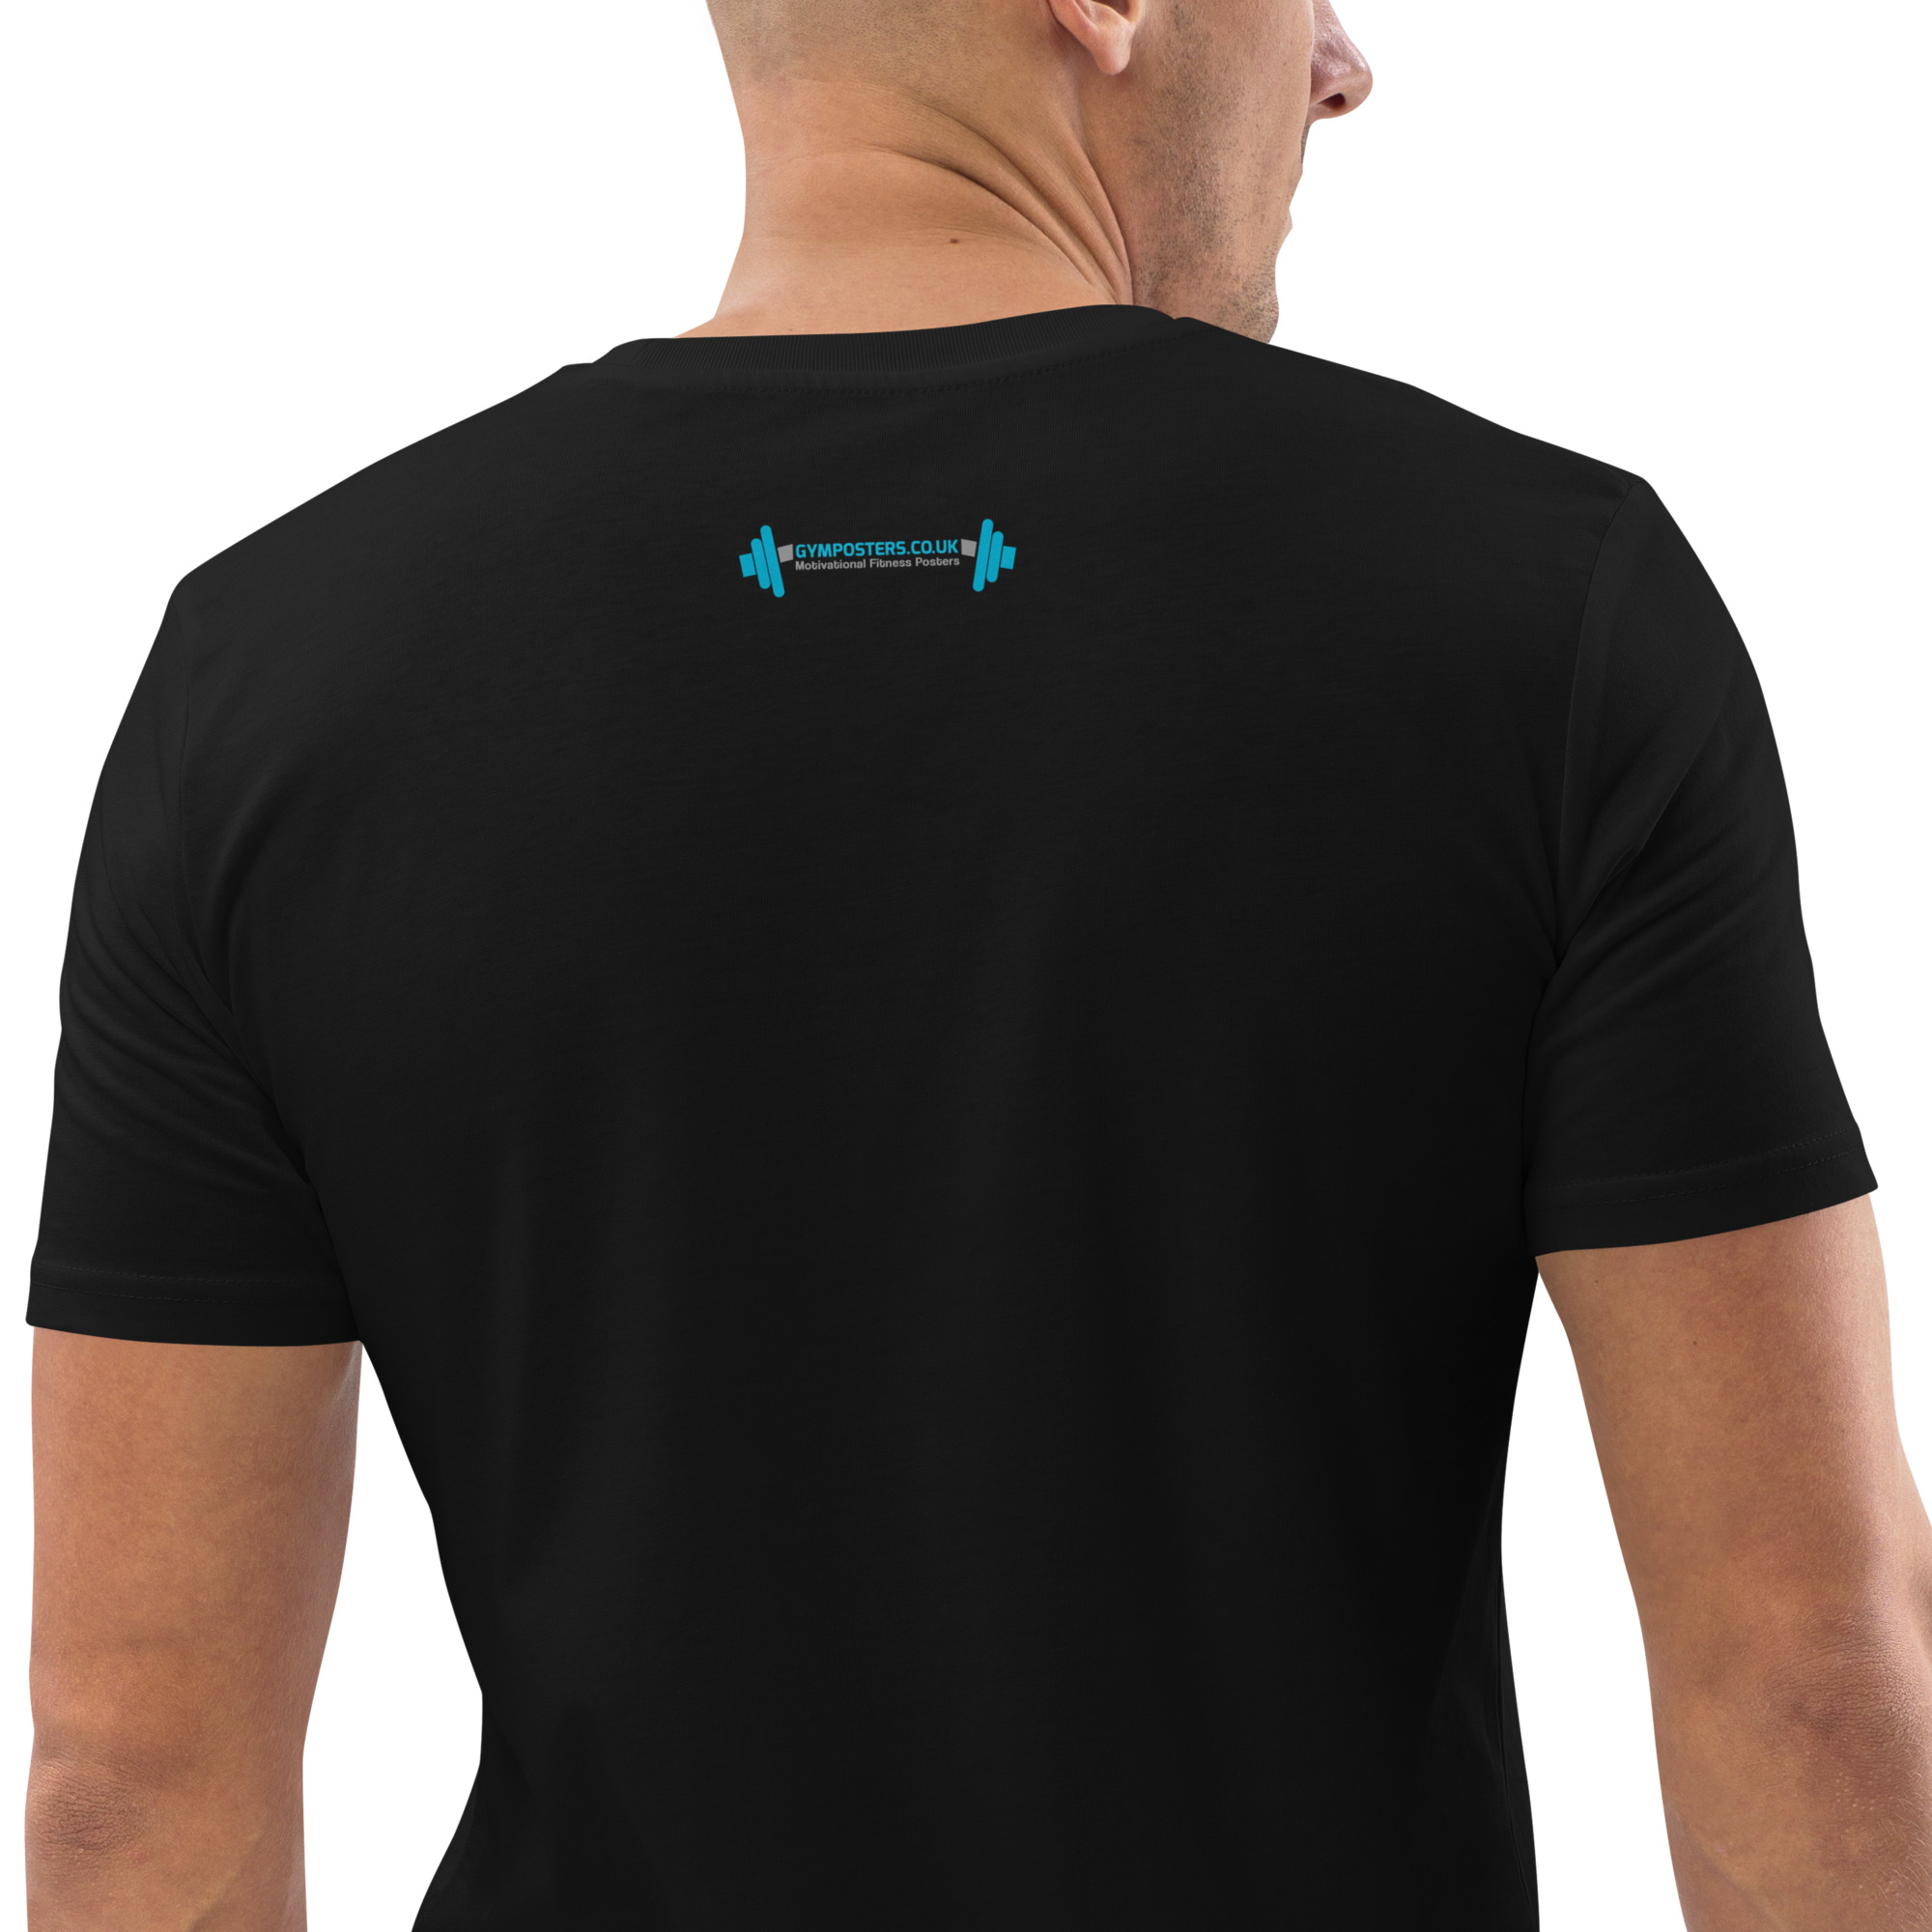 unisex-organic-cotton-t-shirt-black-zoomed-in-6578689f2a3cb.jpg